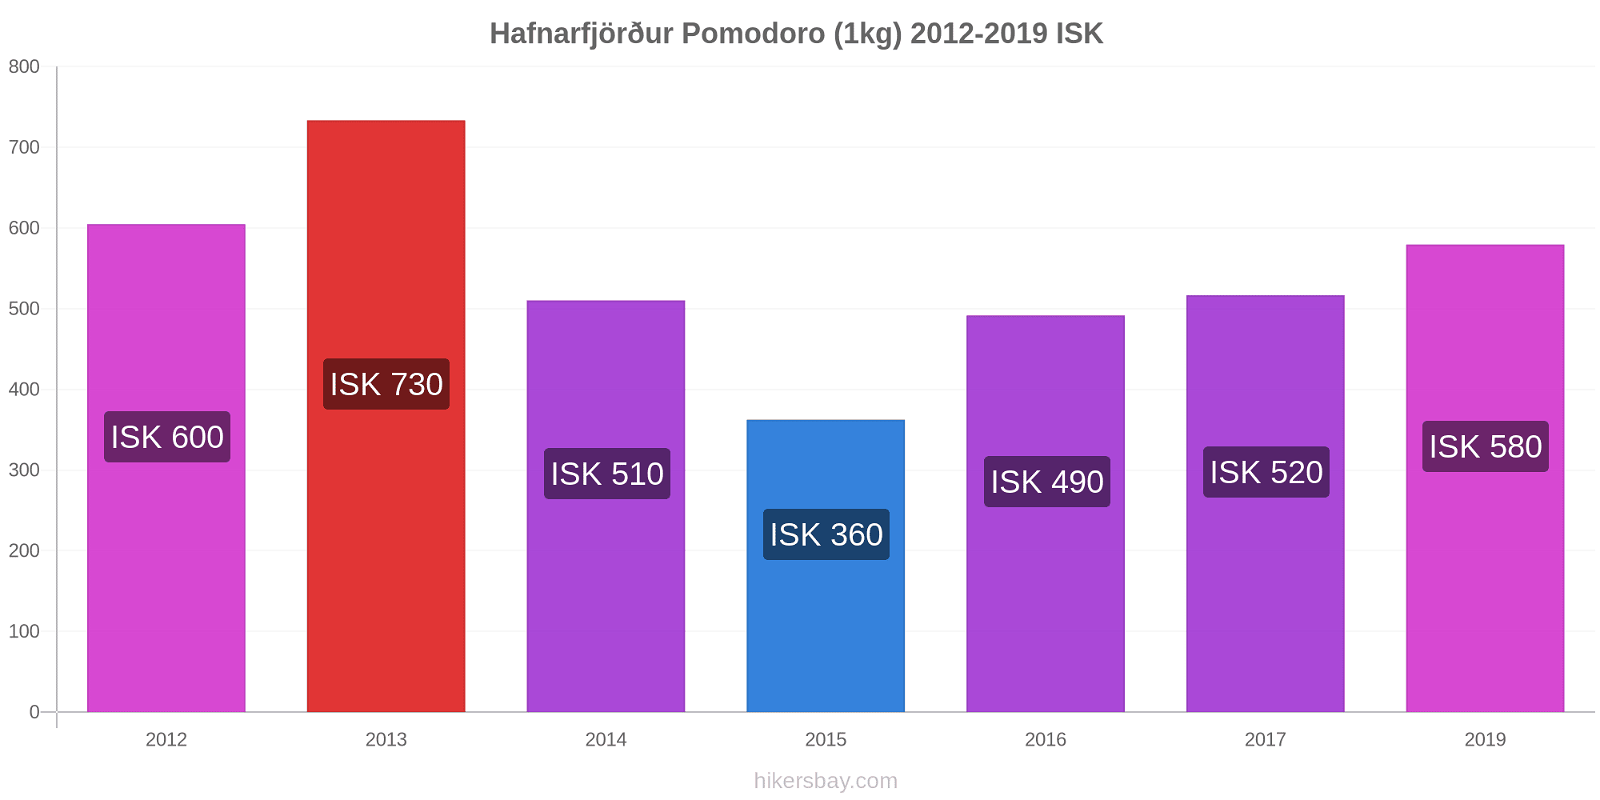 Hafnarfjörður variazioni di prezzo Pomodoro (1kg) hikersbay.com